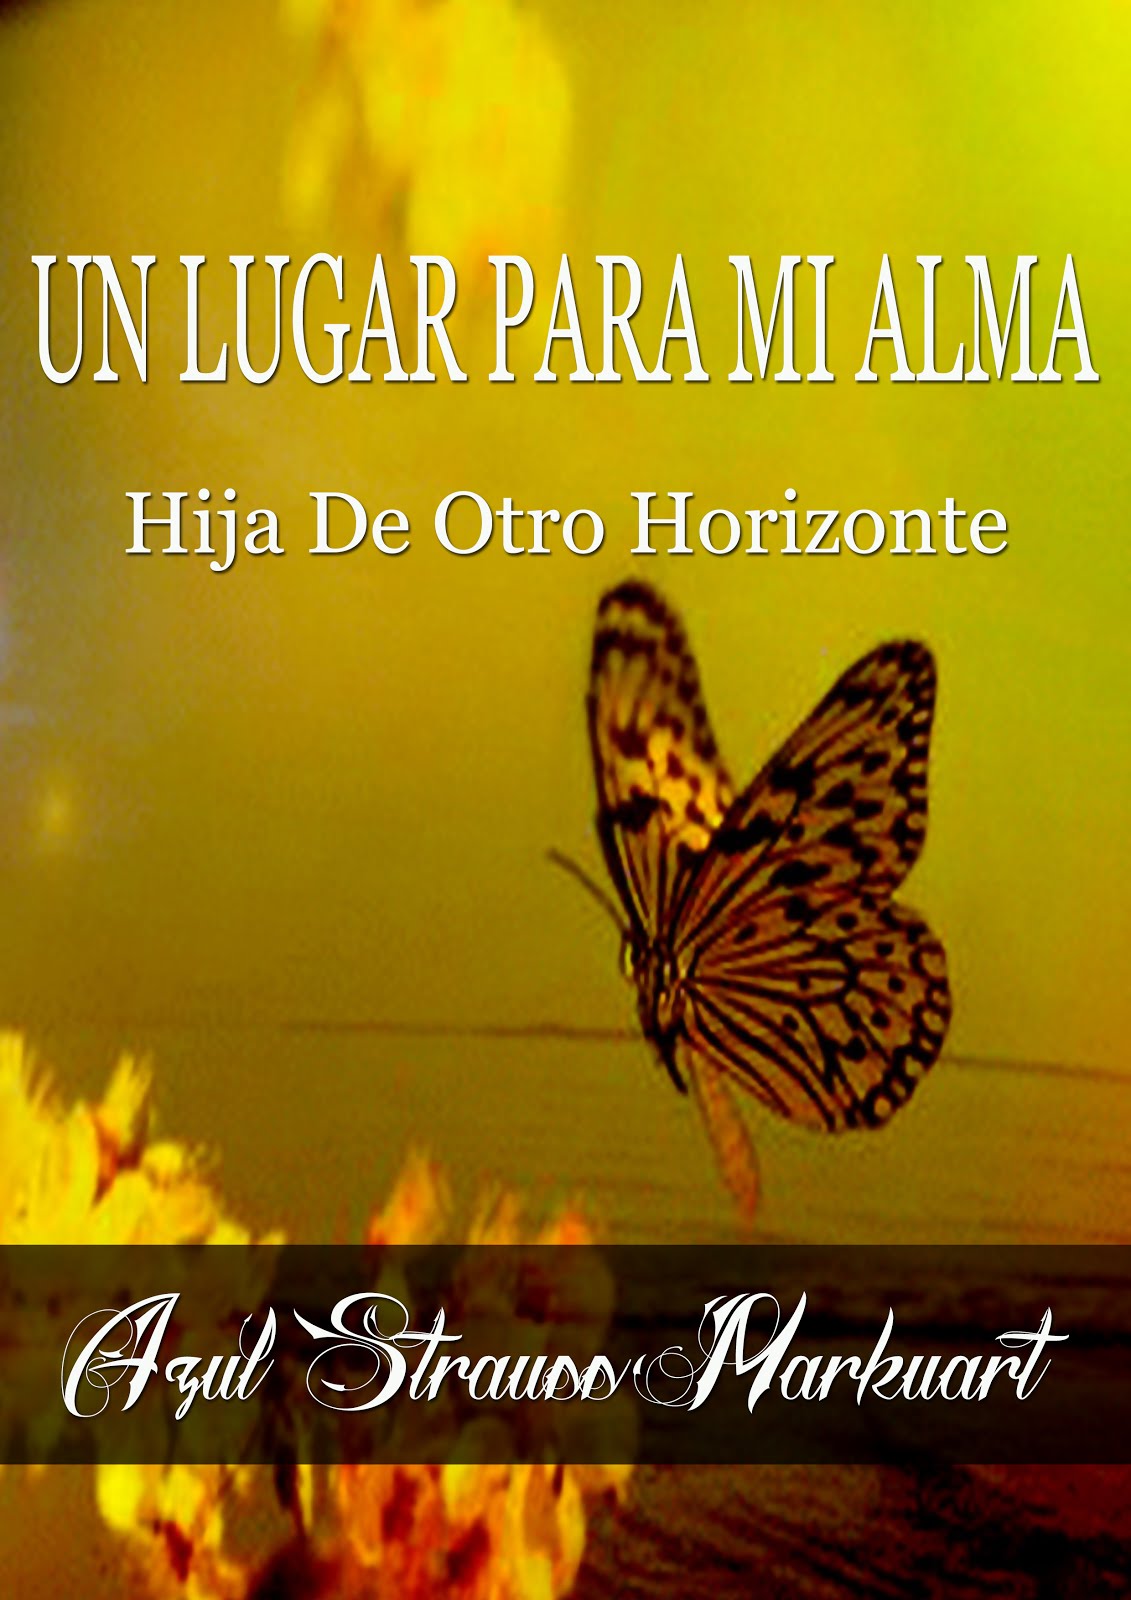 UN LUGAR PARA MI ALMA-2011-Title ID: 6174582 ISBN-13: 978-1530805907